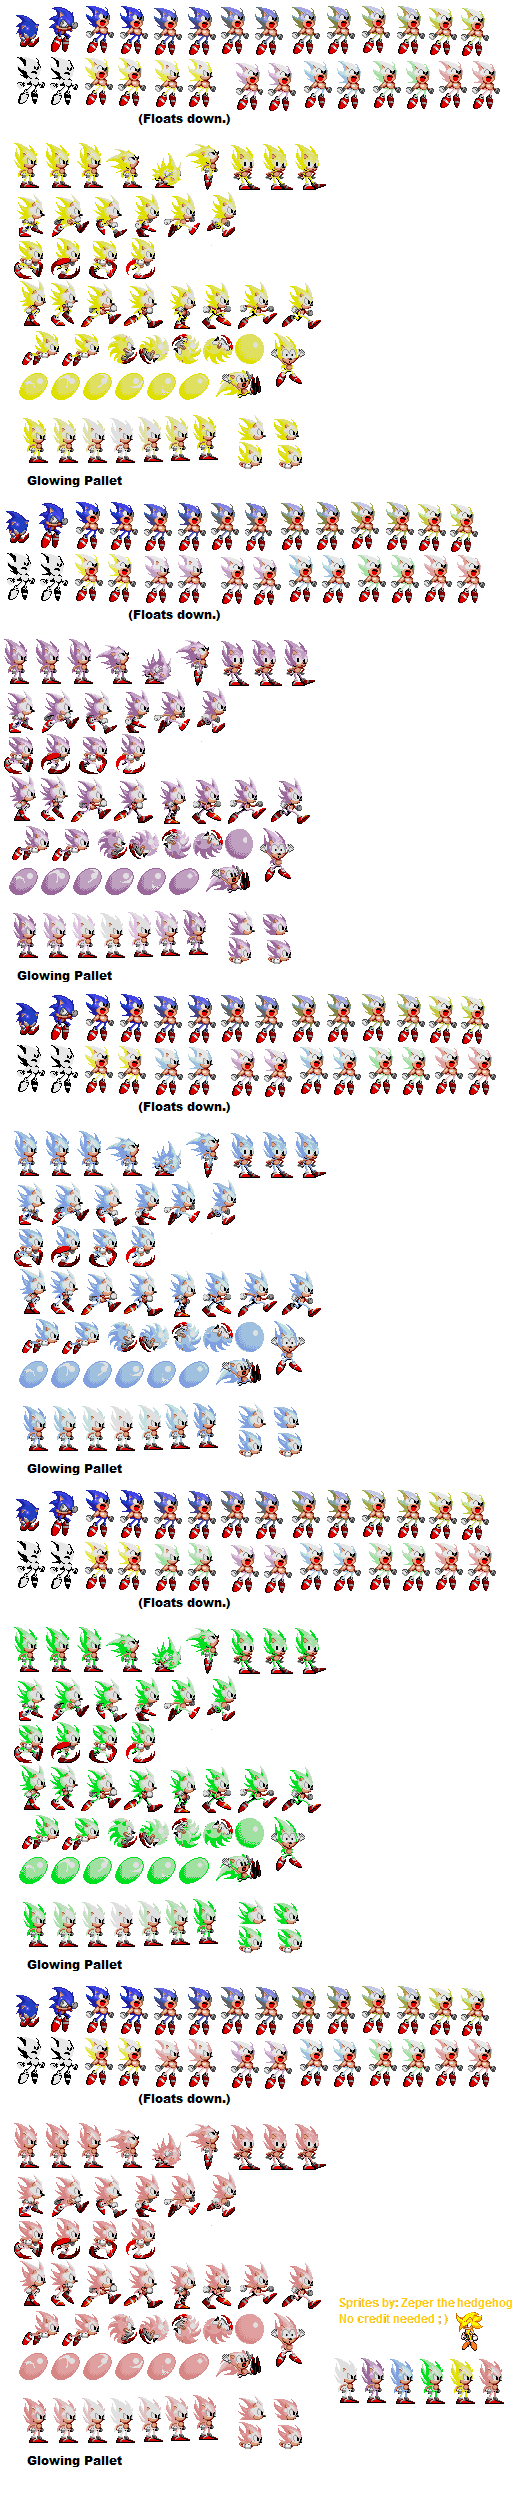 Hyper Sonic And Dark Sonic Custom Sprites Mania Sonicthehedgehog Images Sexiz Pix